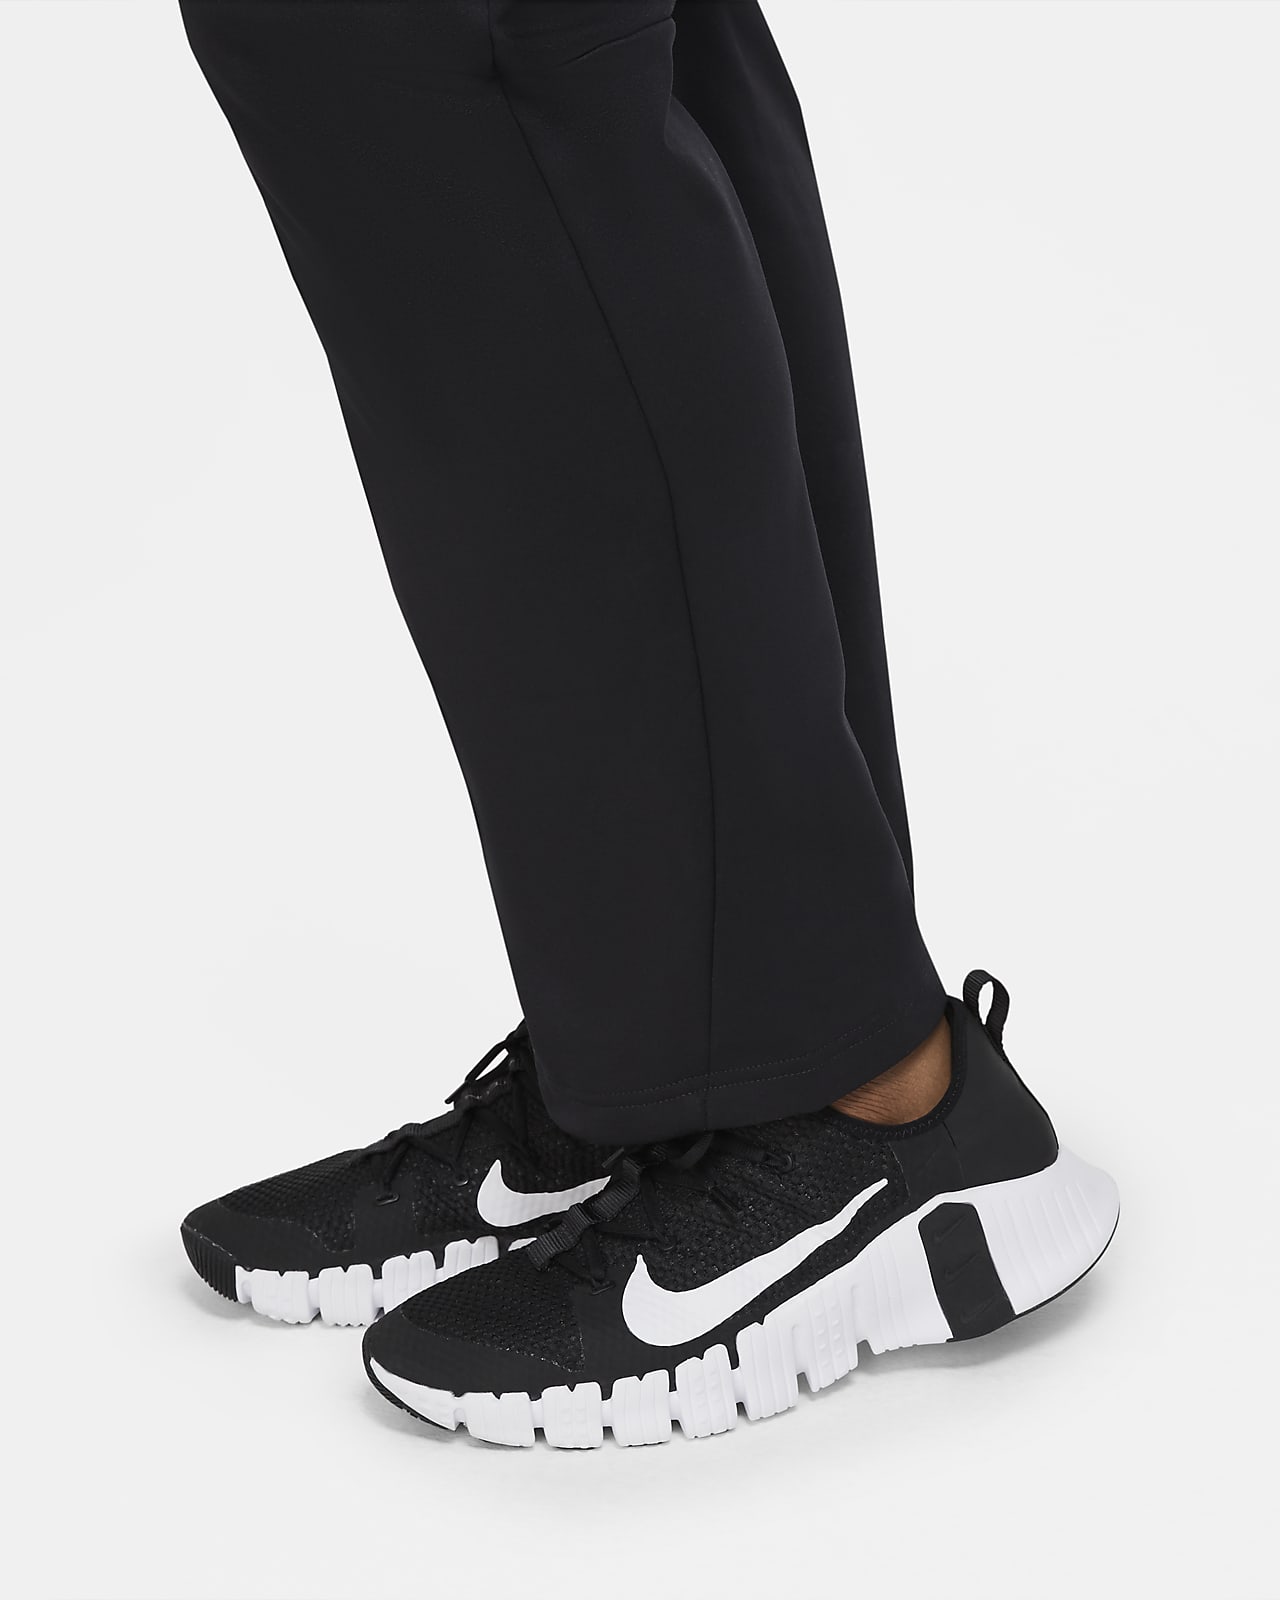 Nike Therma DB4217-063 Men's Dark Gray Heather Pull On Training Pants HY341